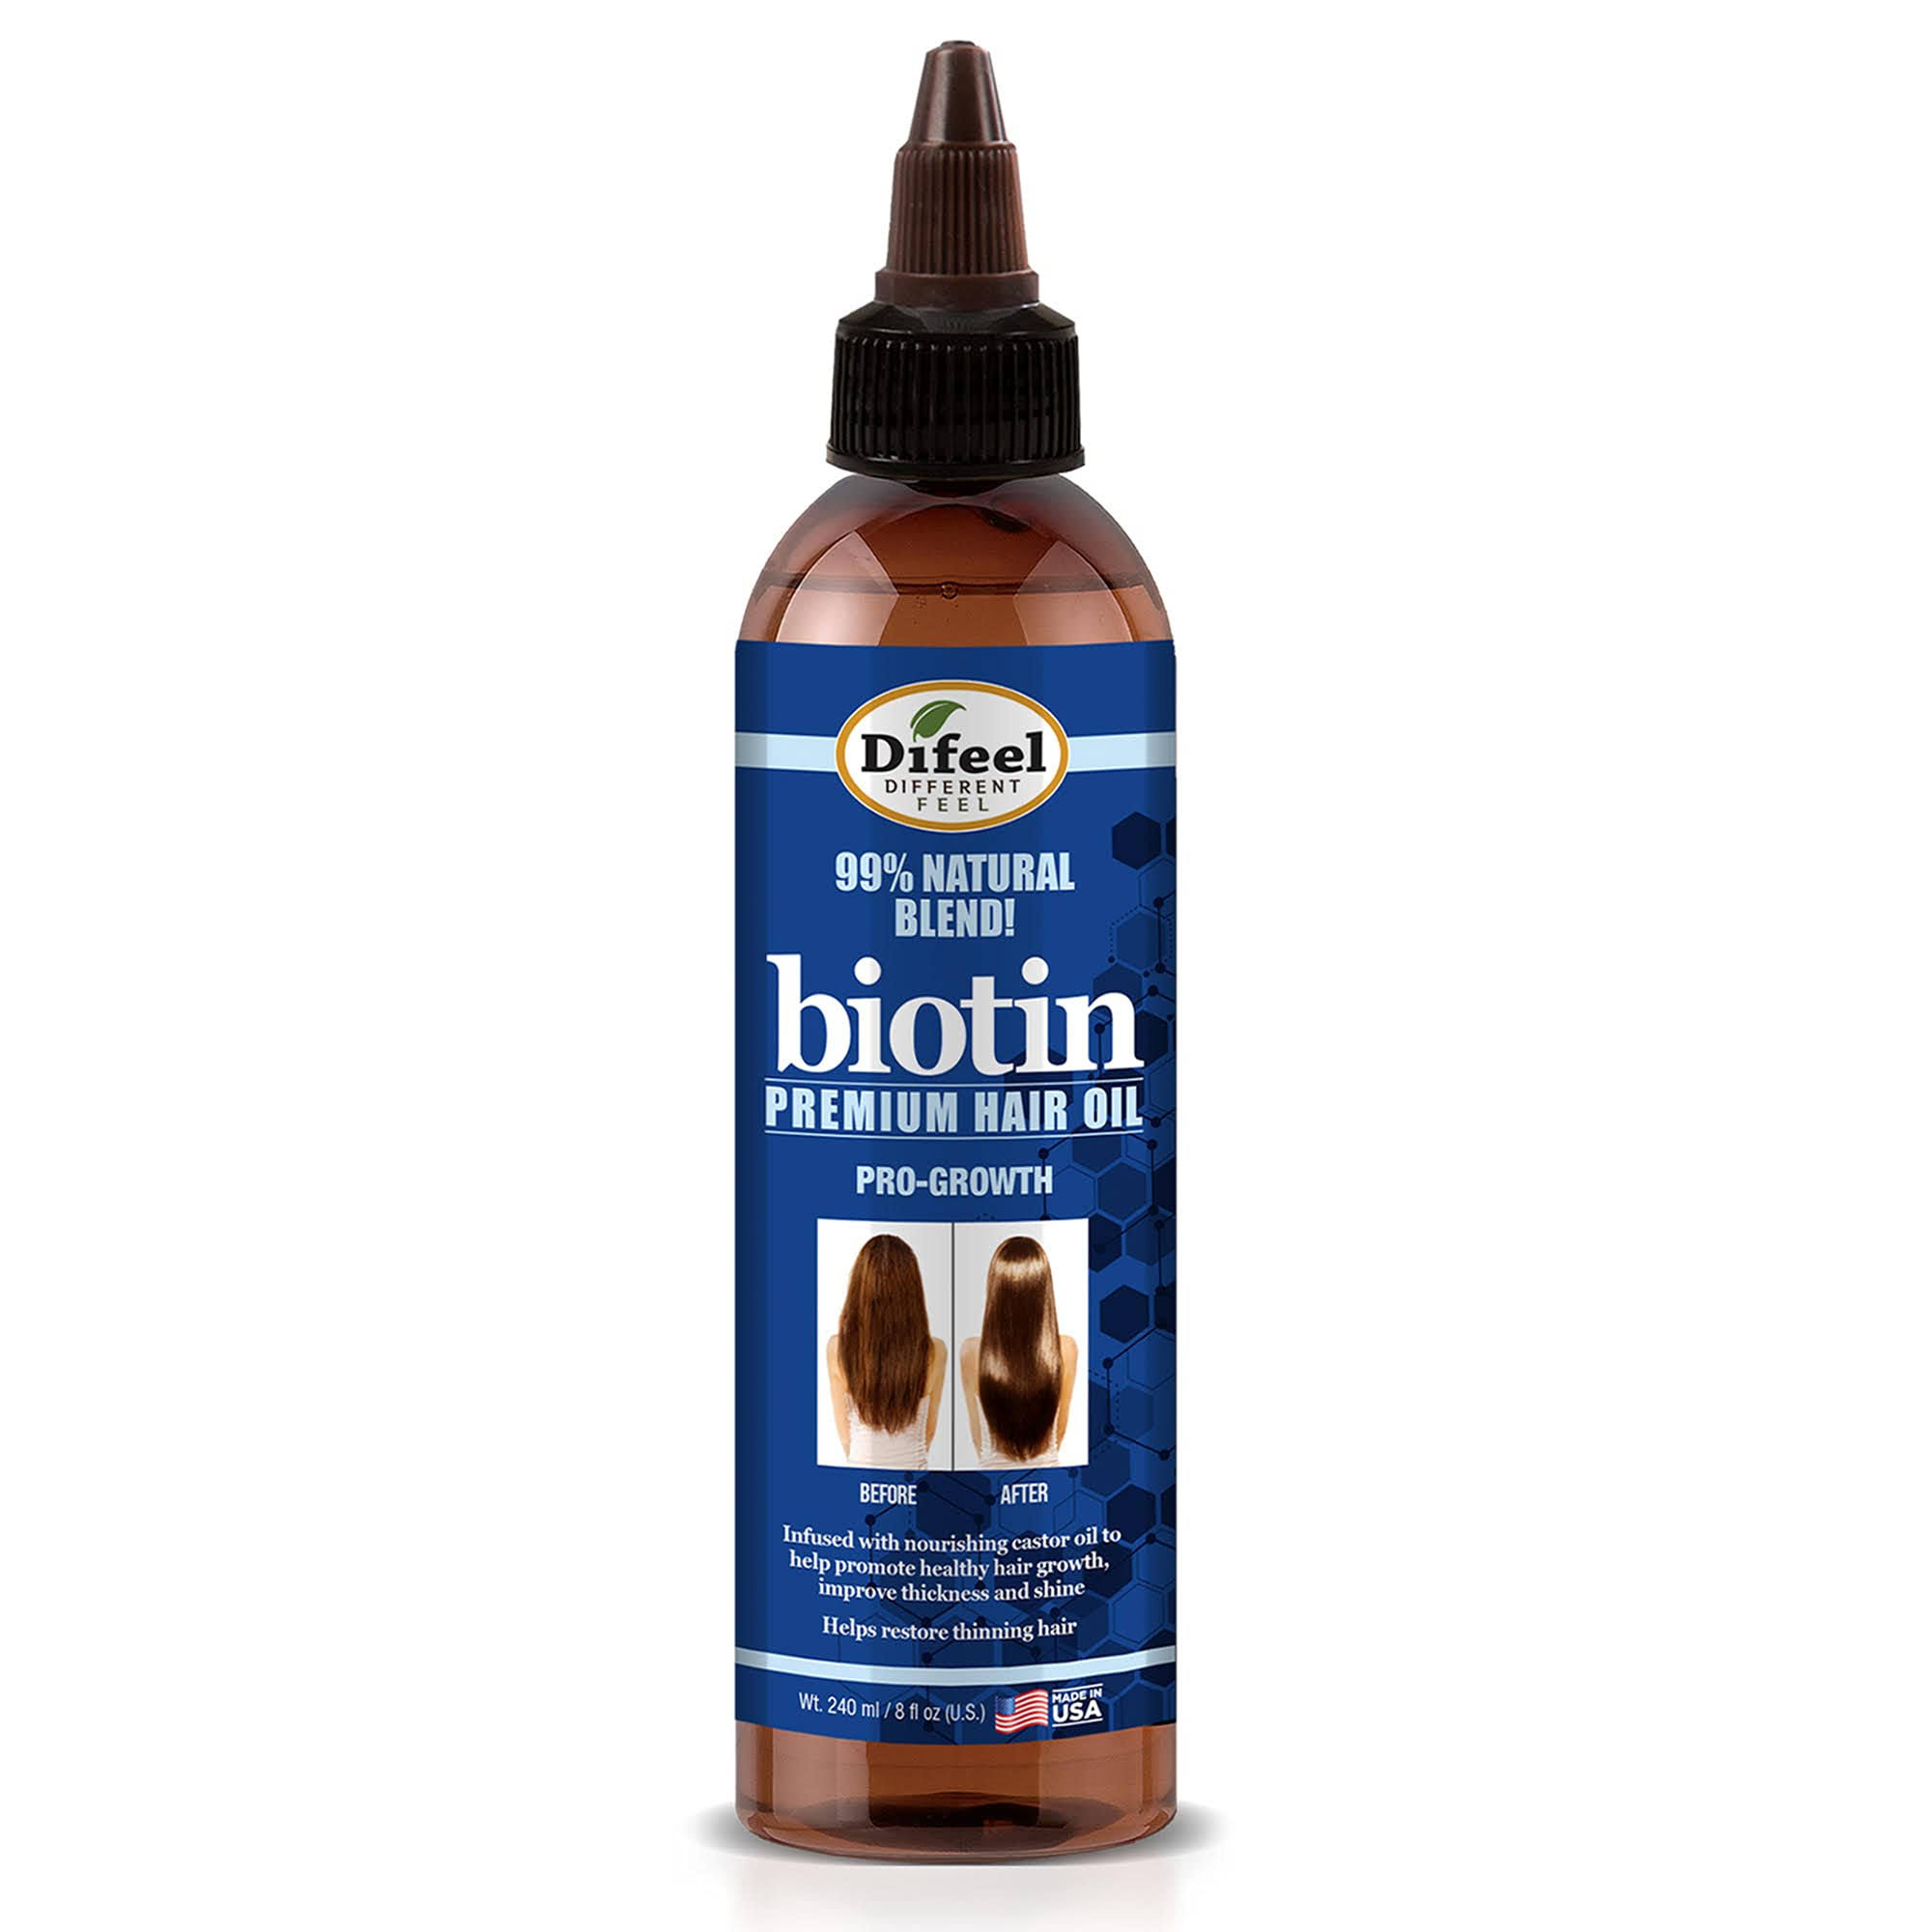 Difeel Biotin Pro Growth Premium Hair Oil 8 oz